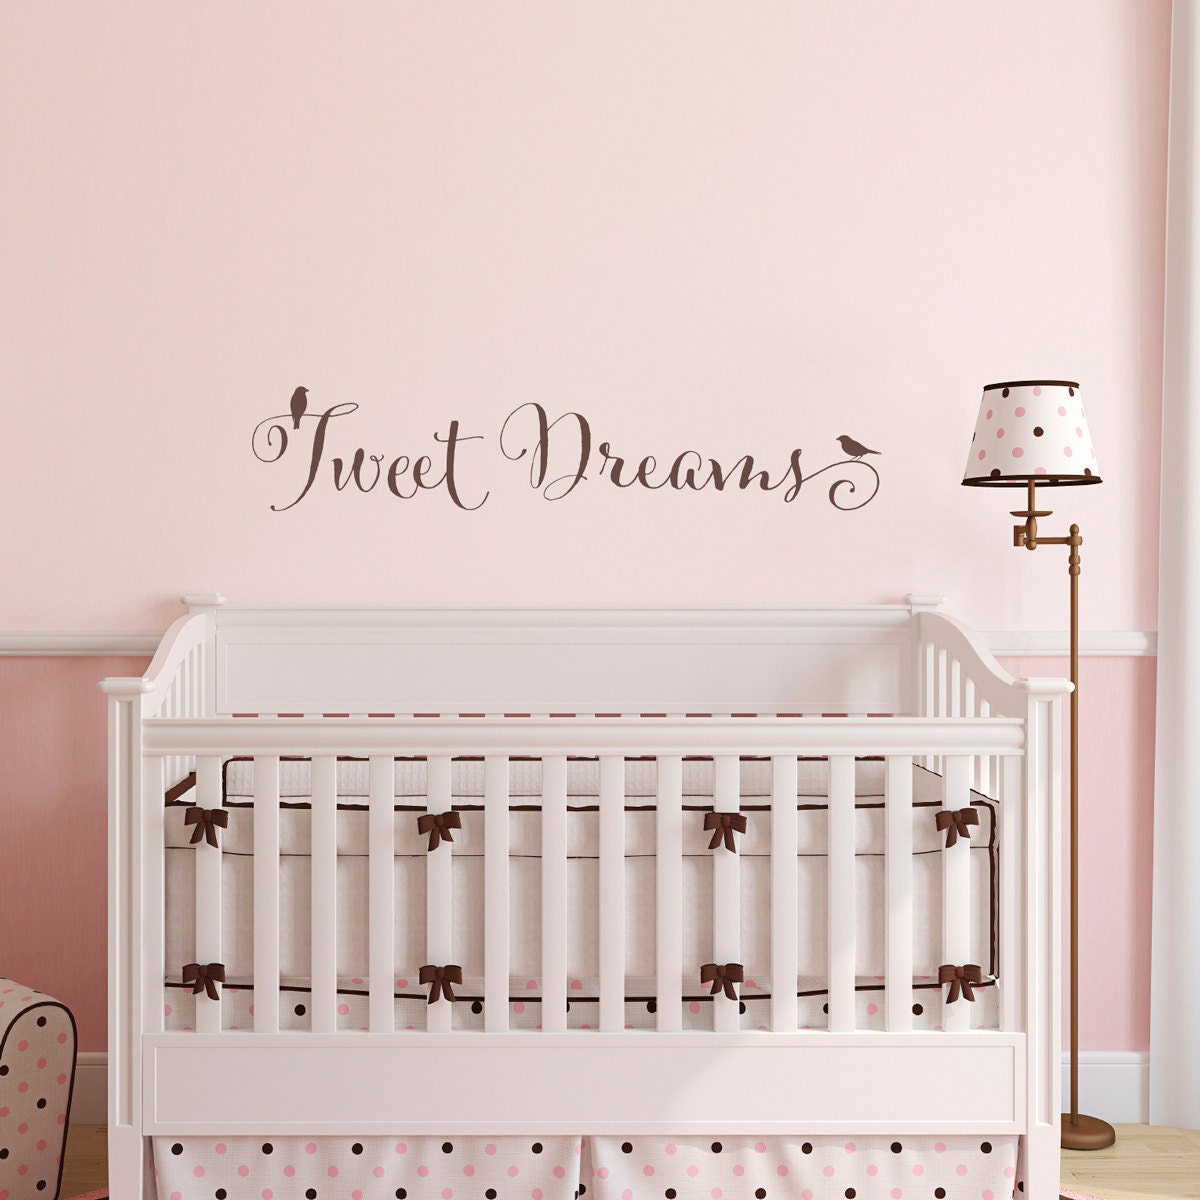 Tweet Dreams Decal - Dream Wall Sticker - Nursery Wall Art